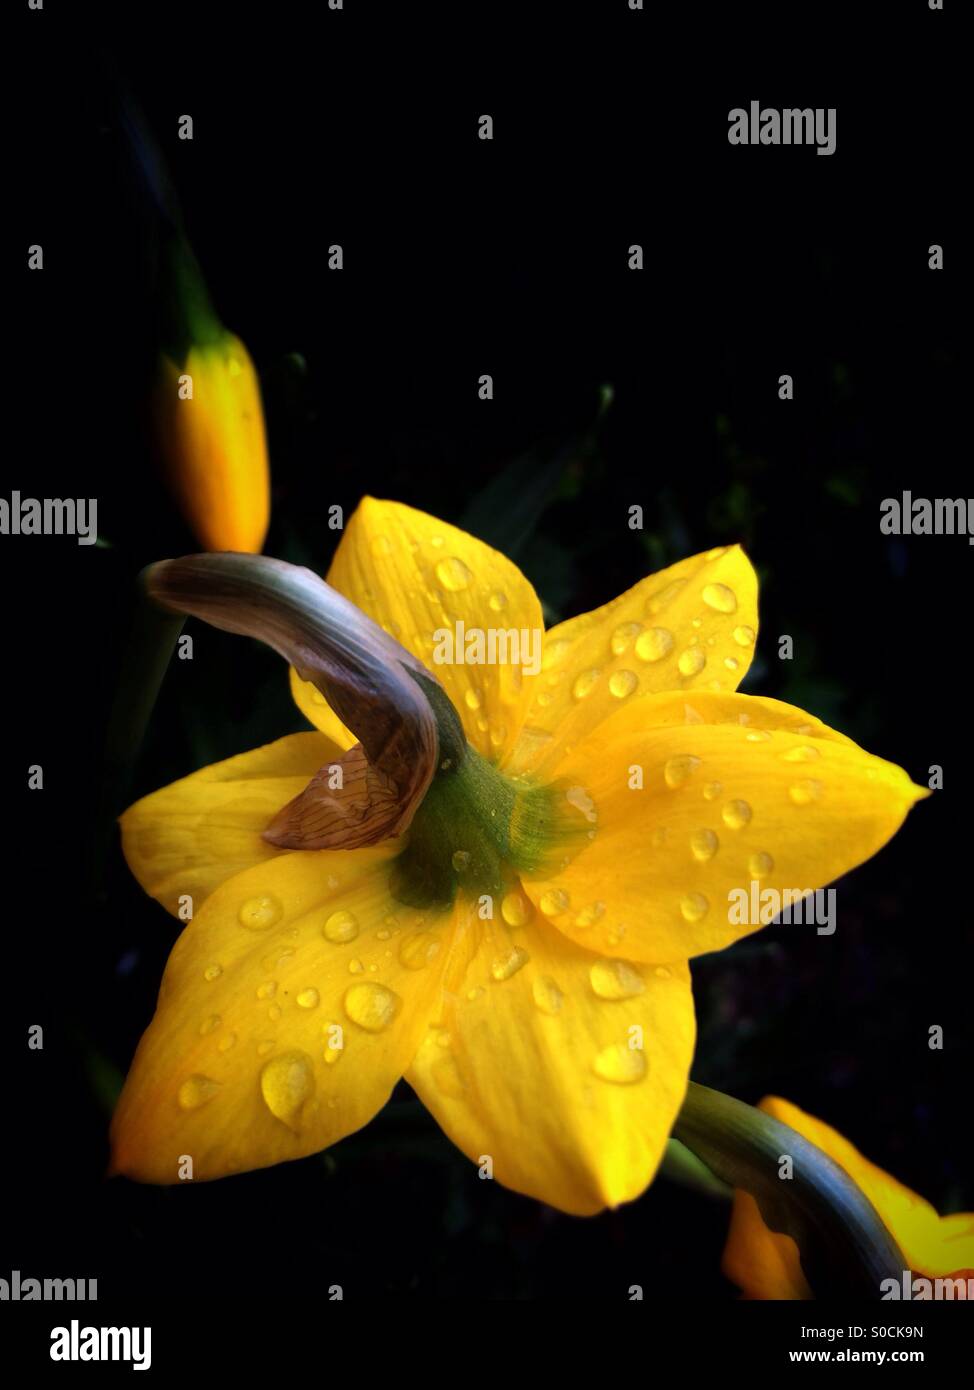 Gelbe Narzisse Blume Stockfoto